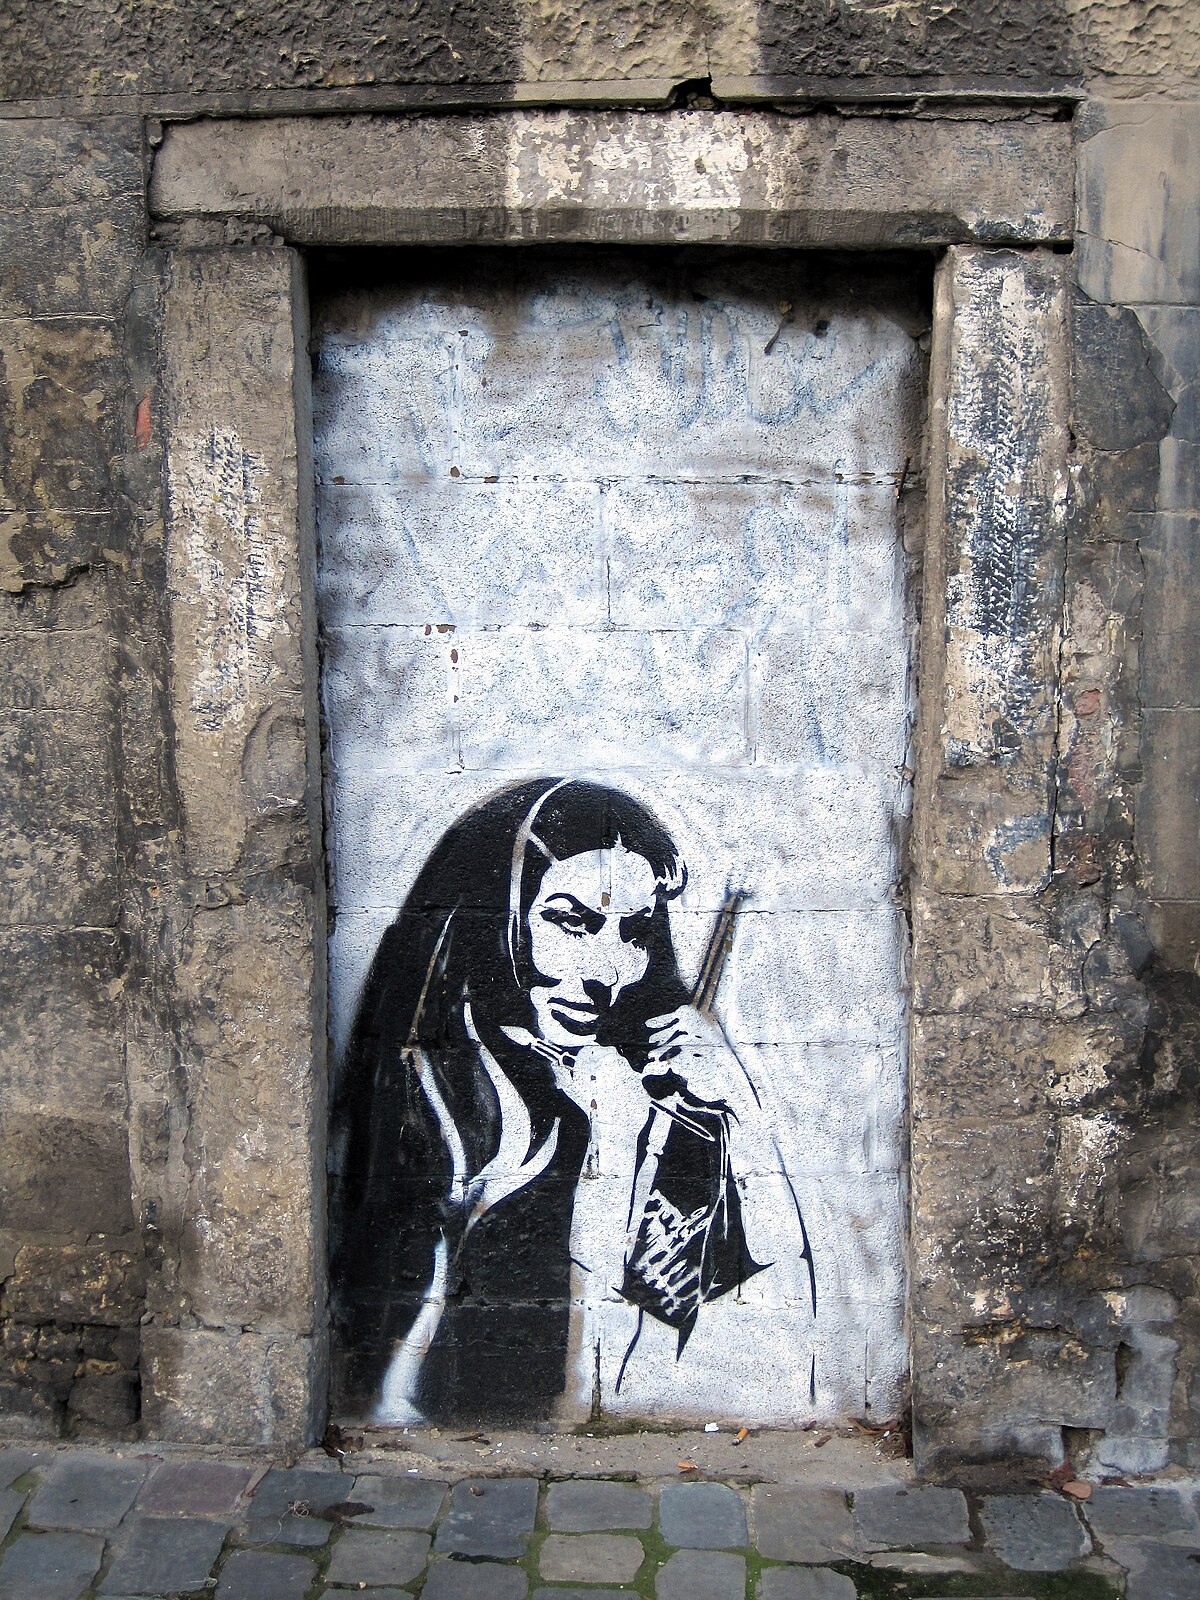 Stencil Graffiti An International Trend: Art, Political Statement, Vandalism